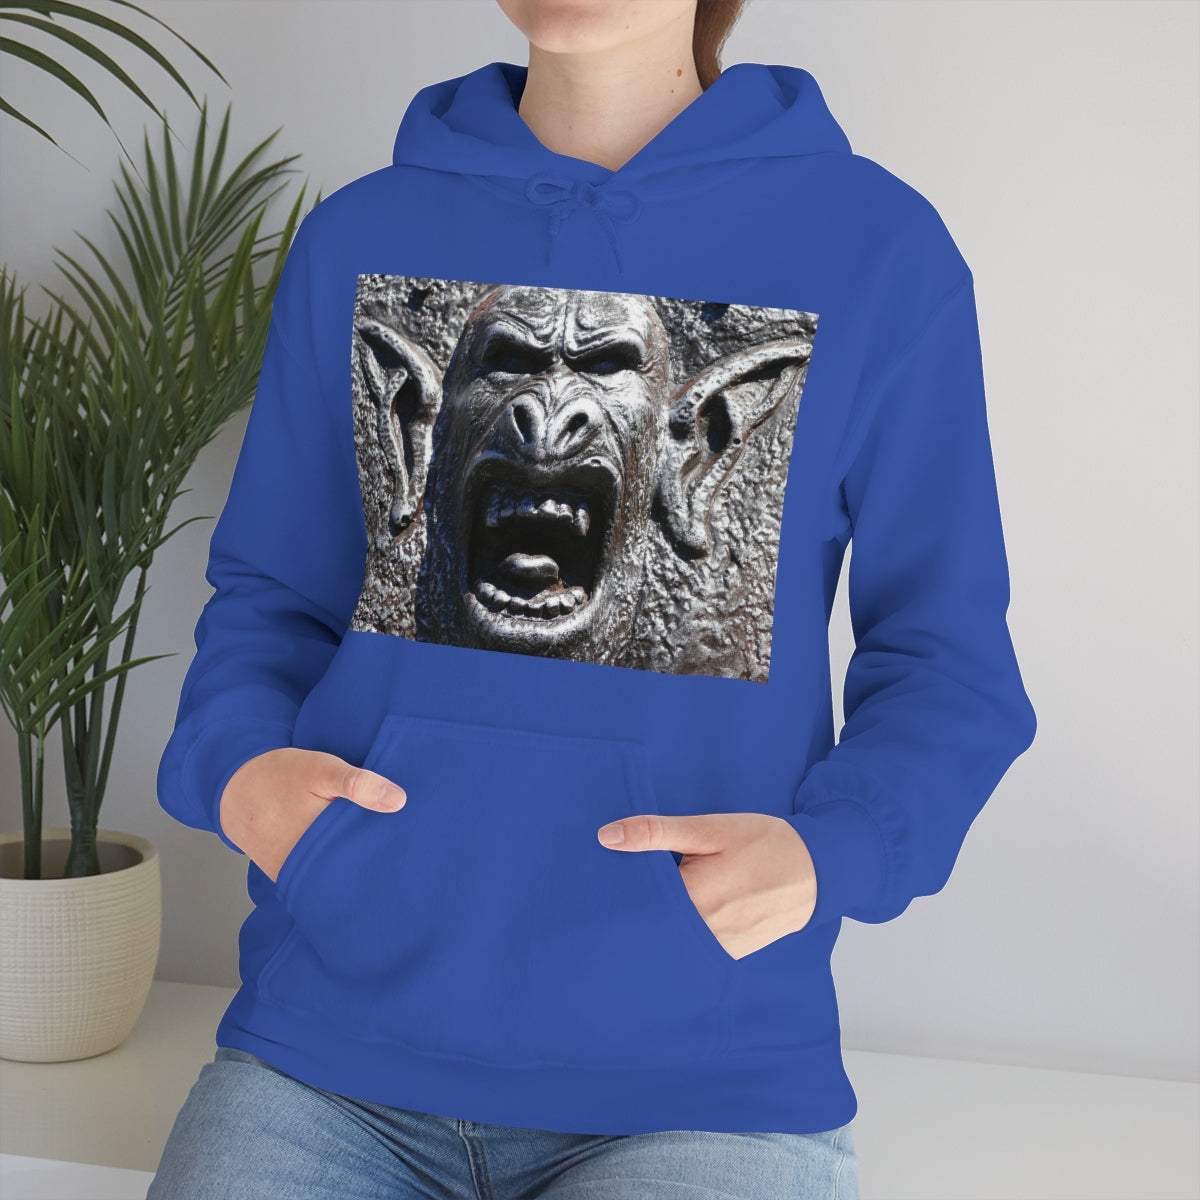 Frenzy Scream - Unisex Heavy Blend Hooded Sweatshirt - Fry1Productions